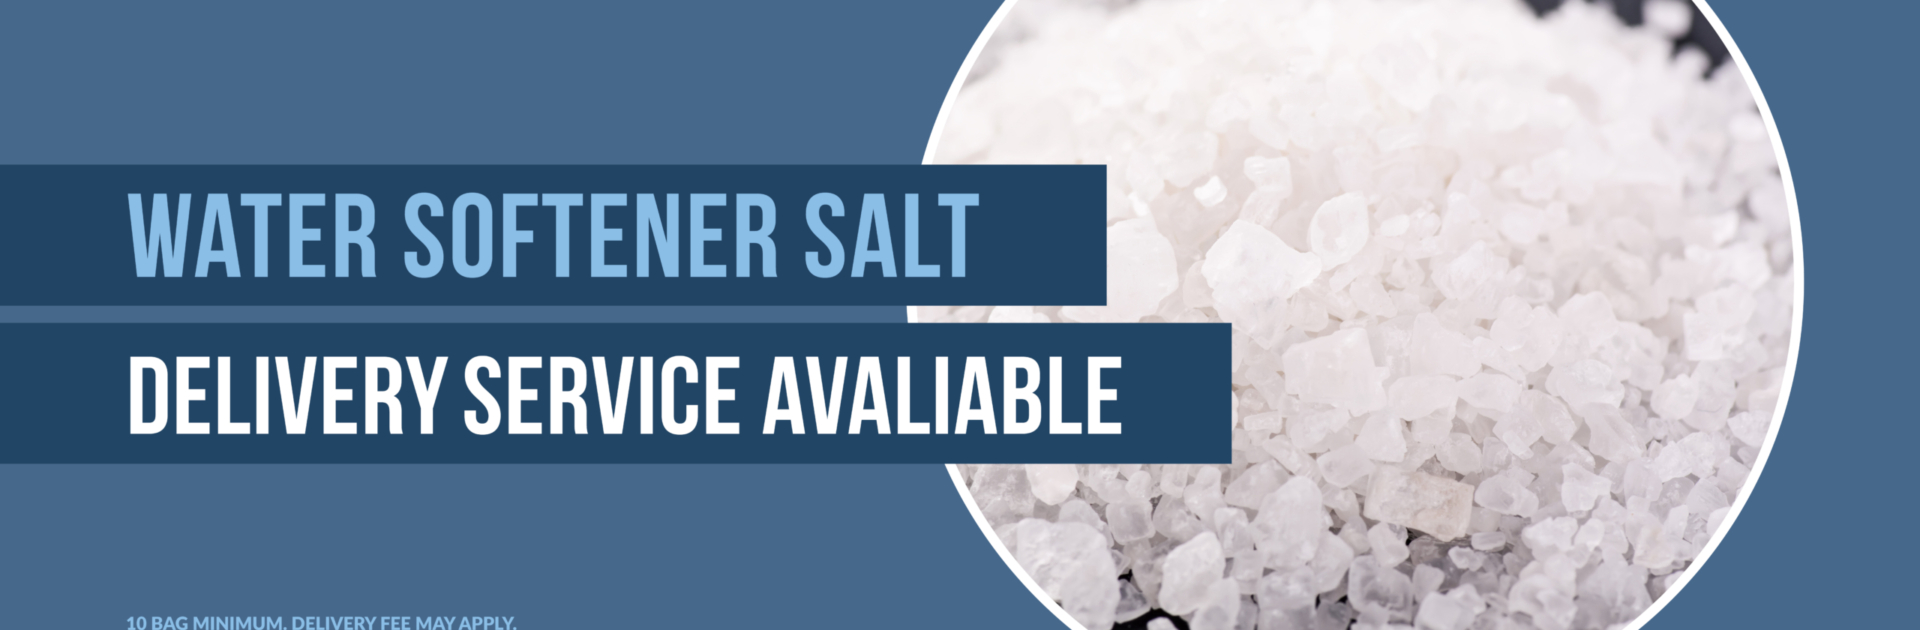 GLWS-water softener salt delivery!